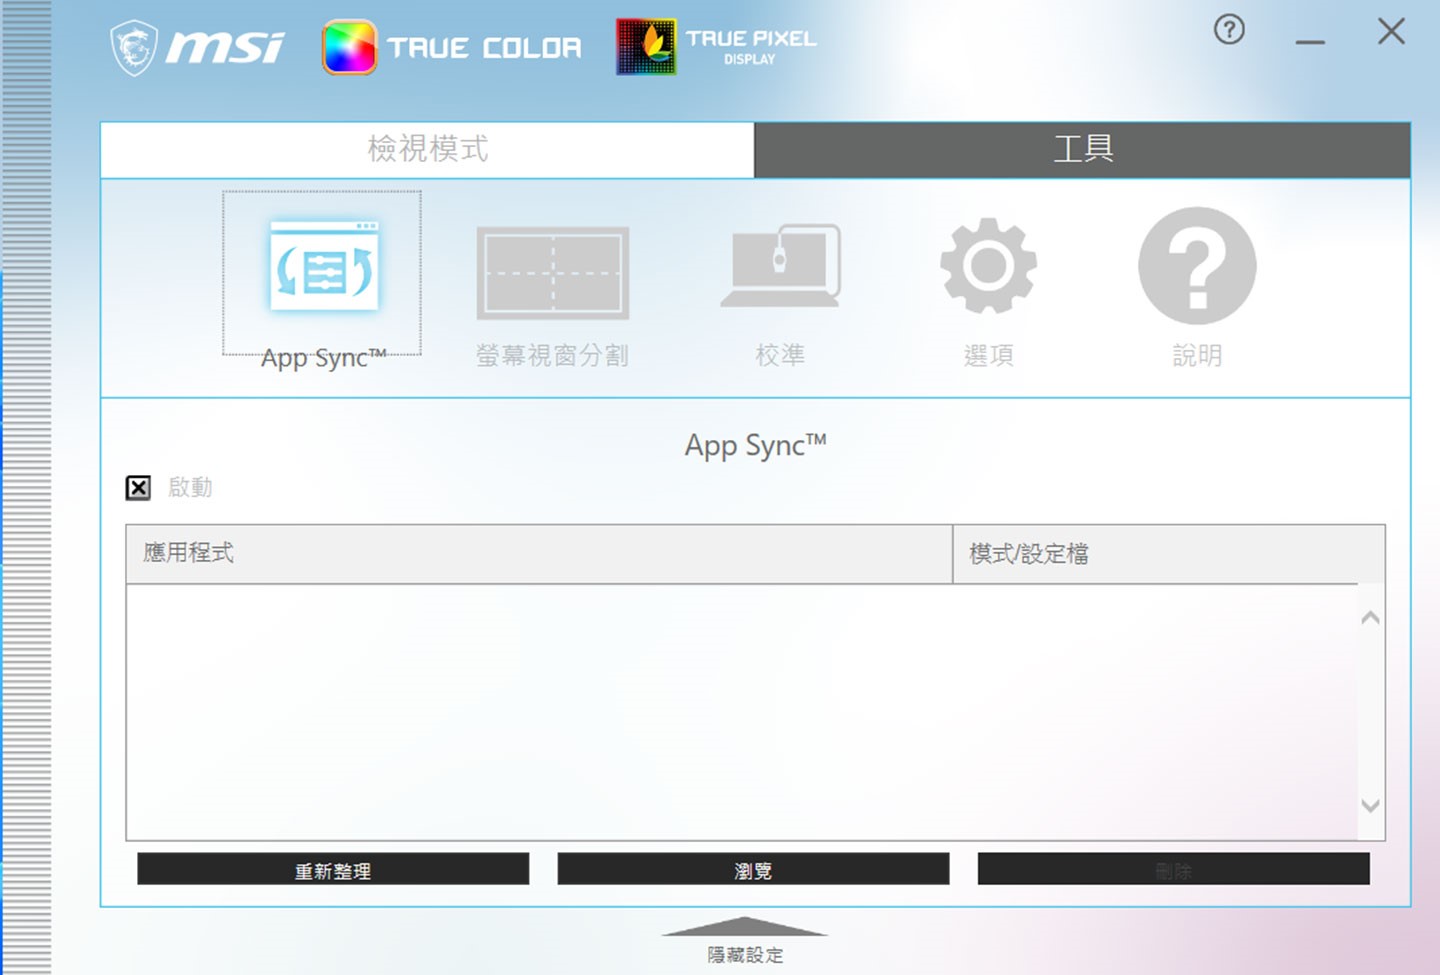 True Color 也提供 App Sync、螢幕視窗分割、校準…工具。